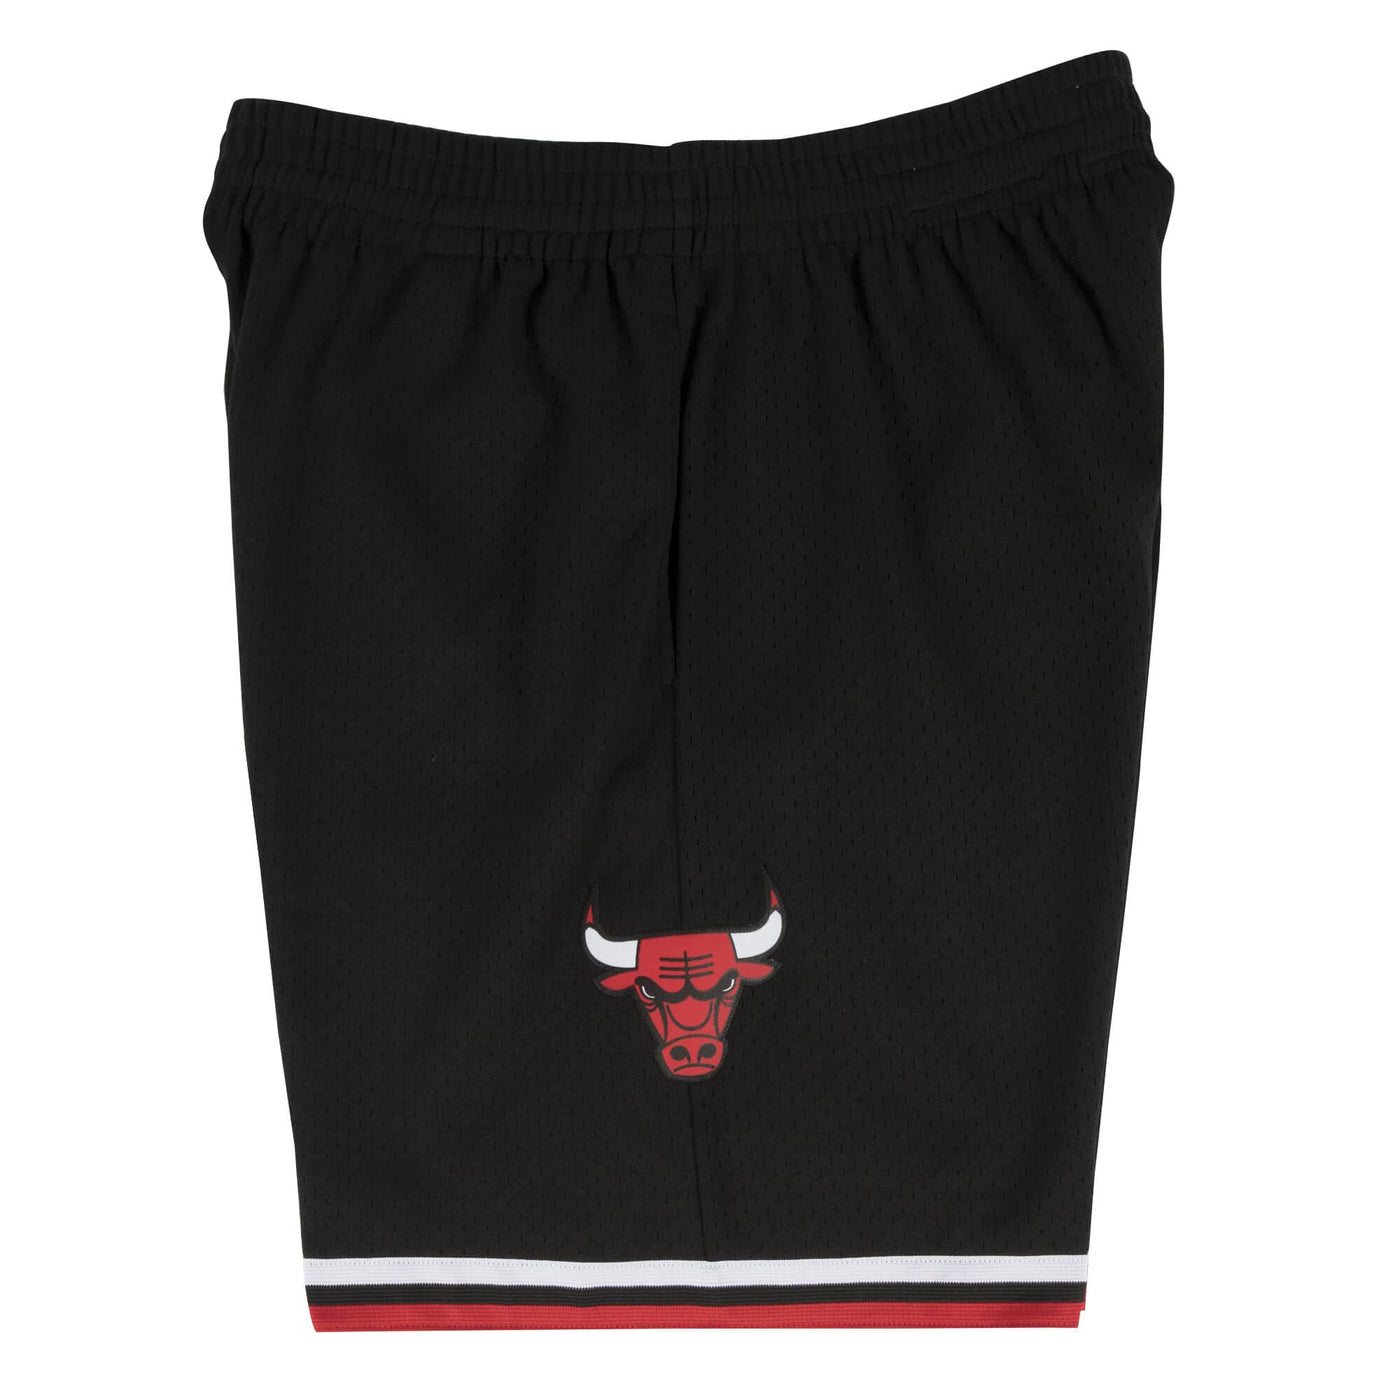 Mitchell & Ness Swingman Shorts Chicago Bulls Black/Red